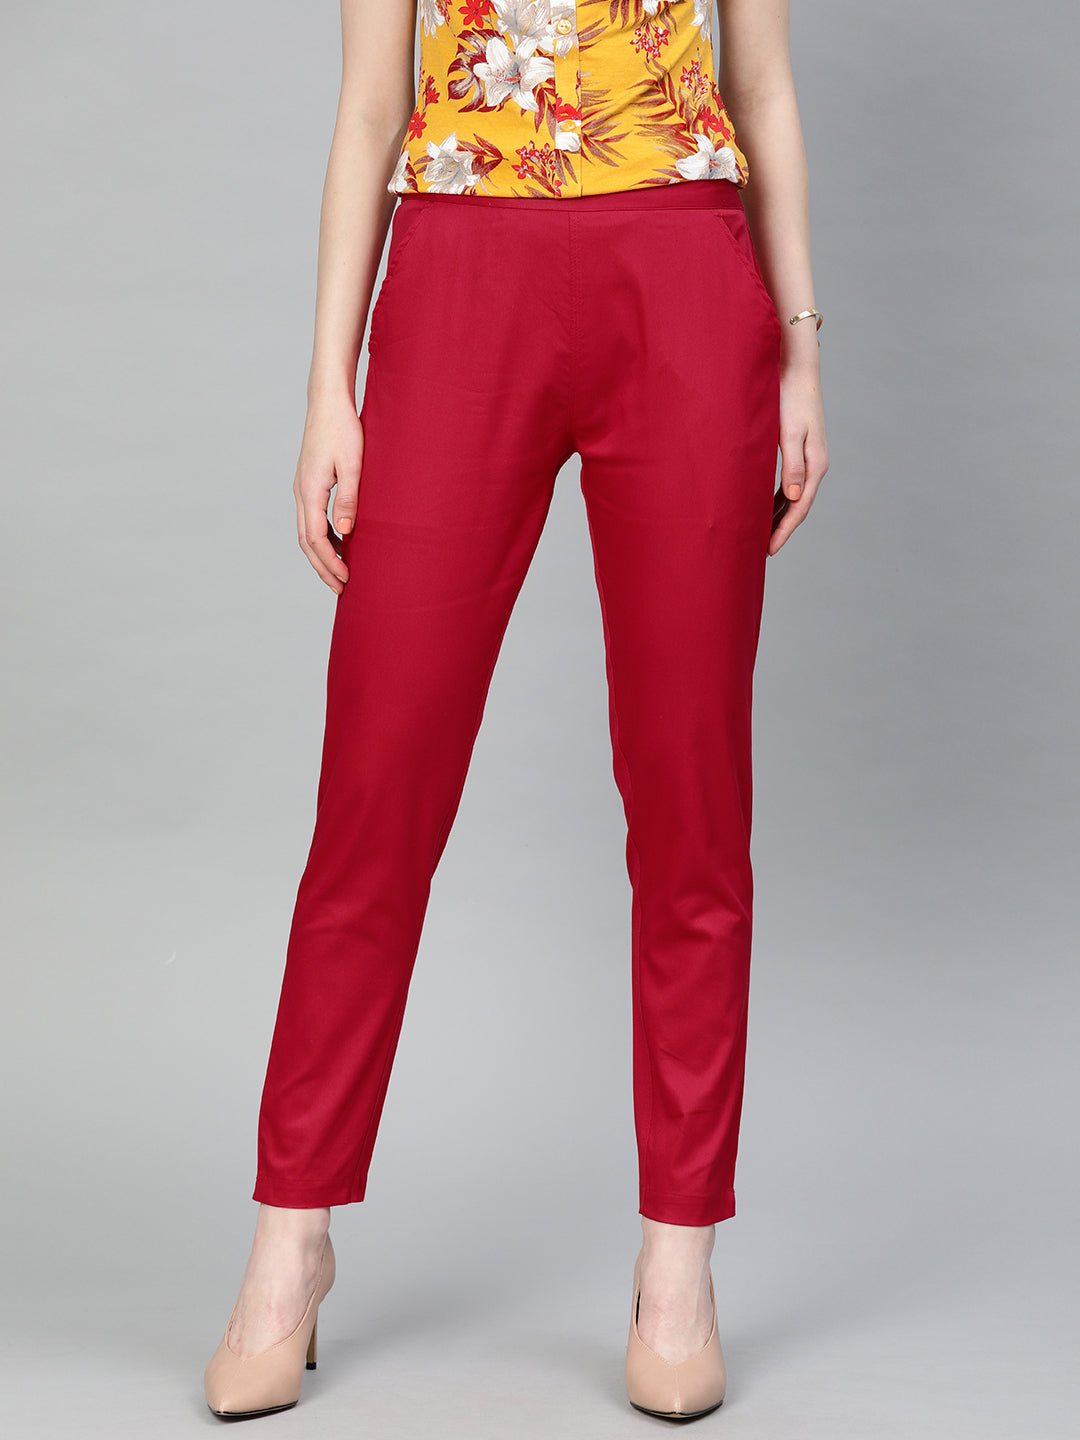 Shop Red Solid Cotton Lycra Pant